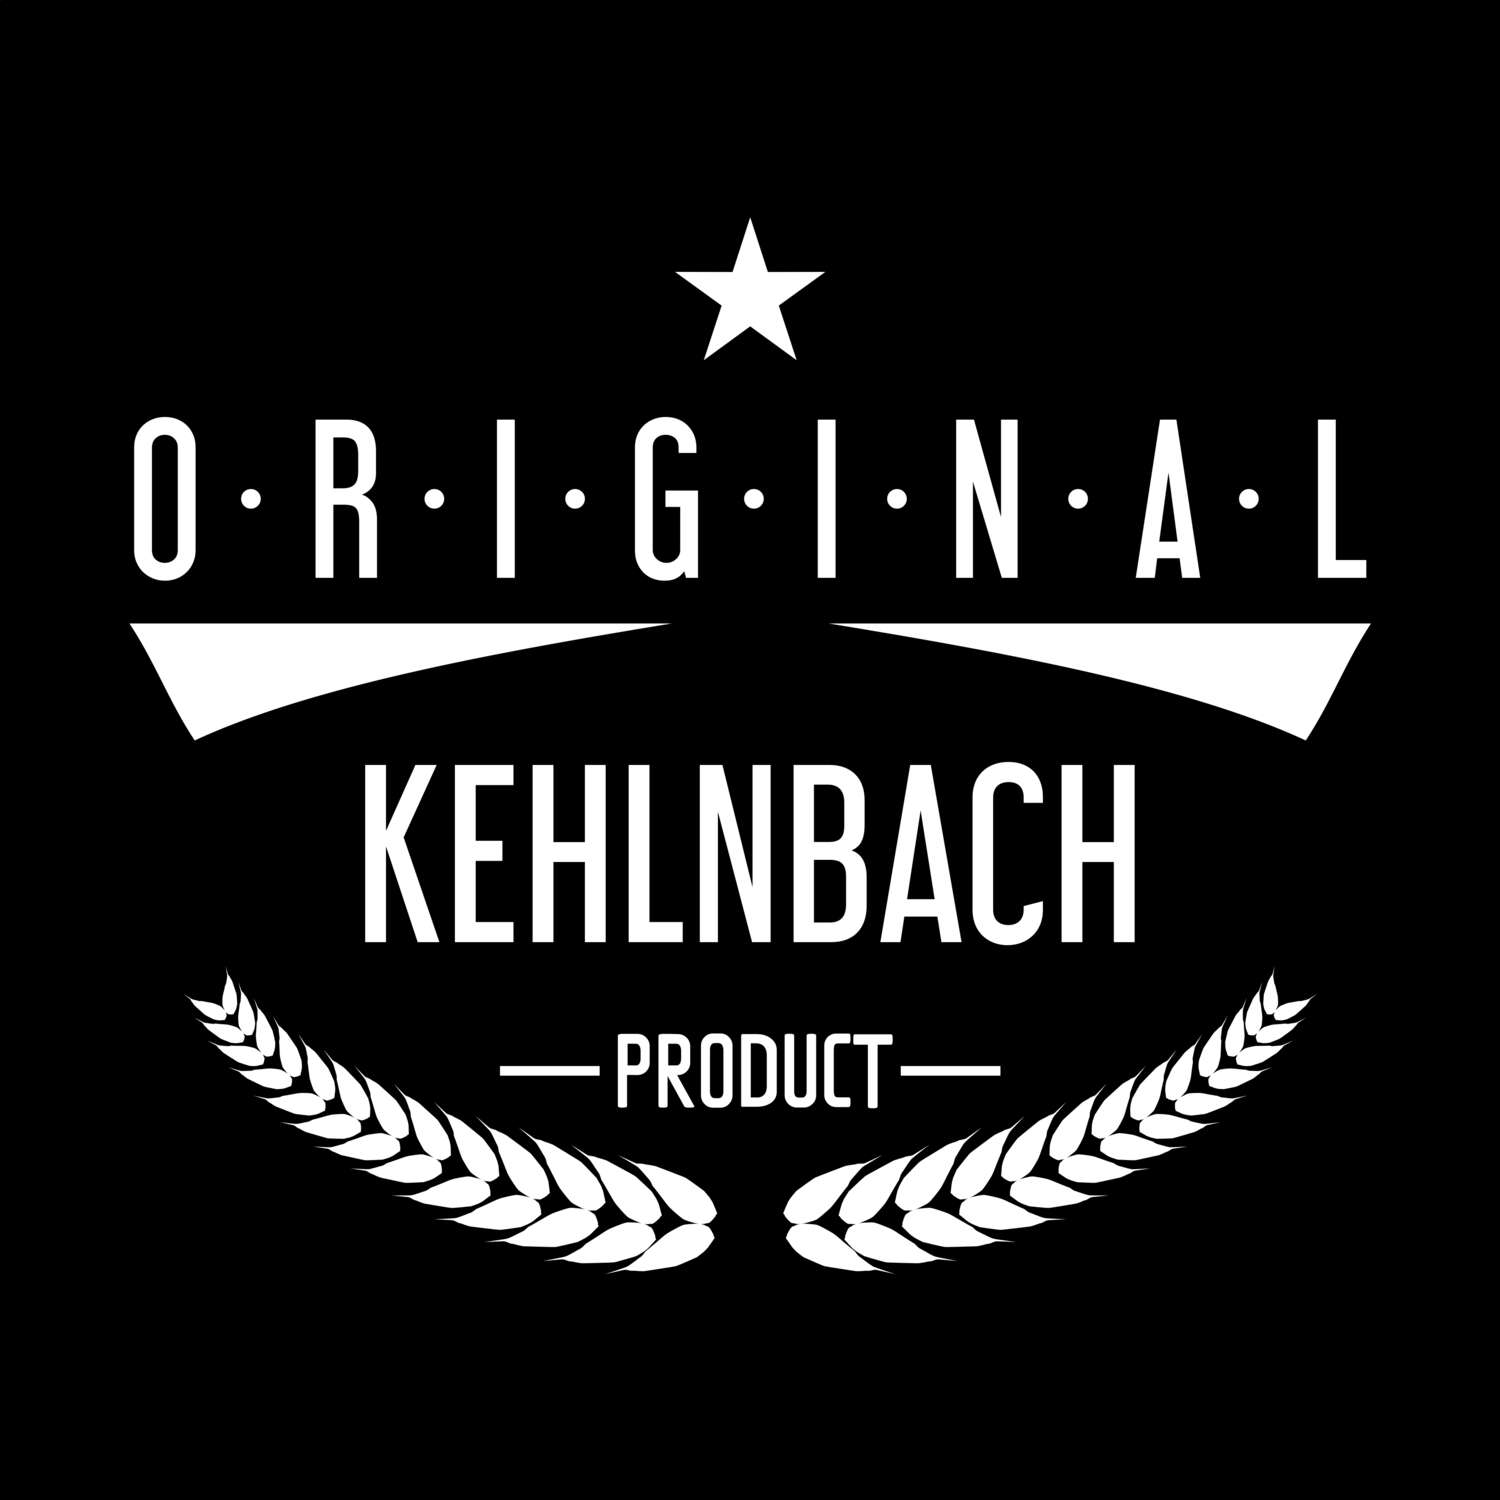 Kehlnbach T-Shirt »Original Product«